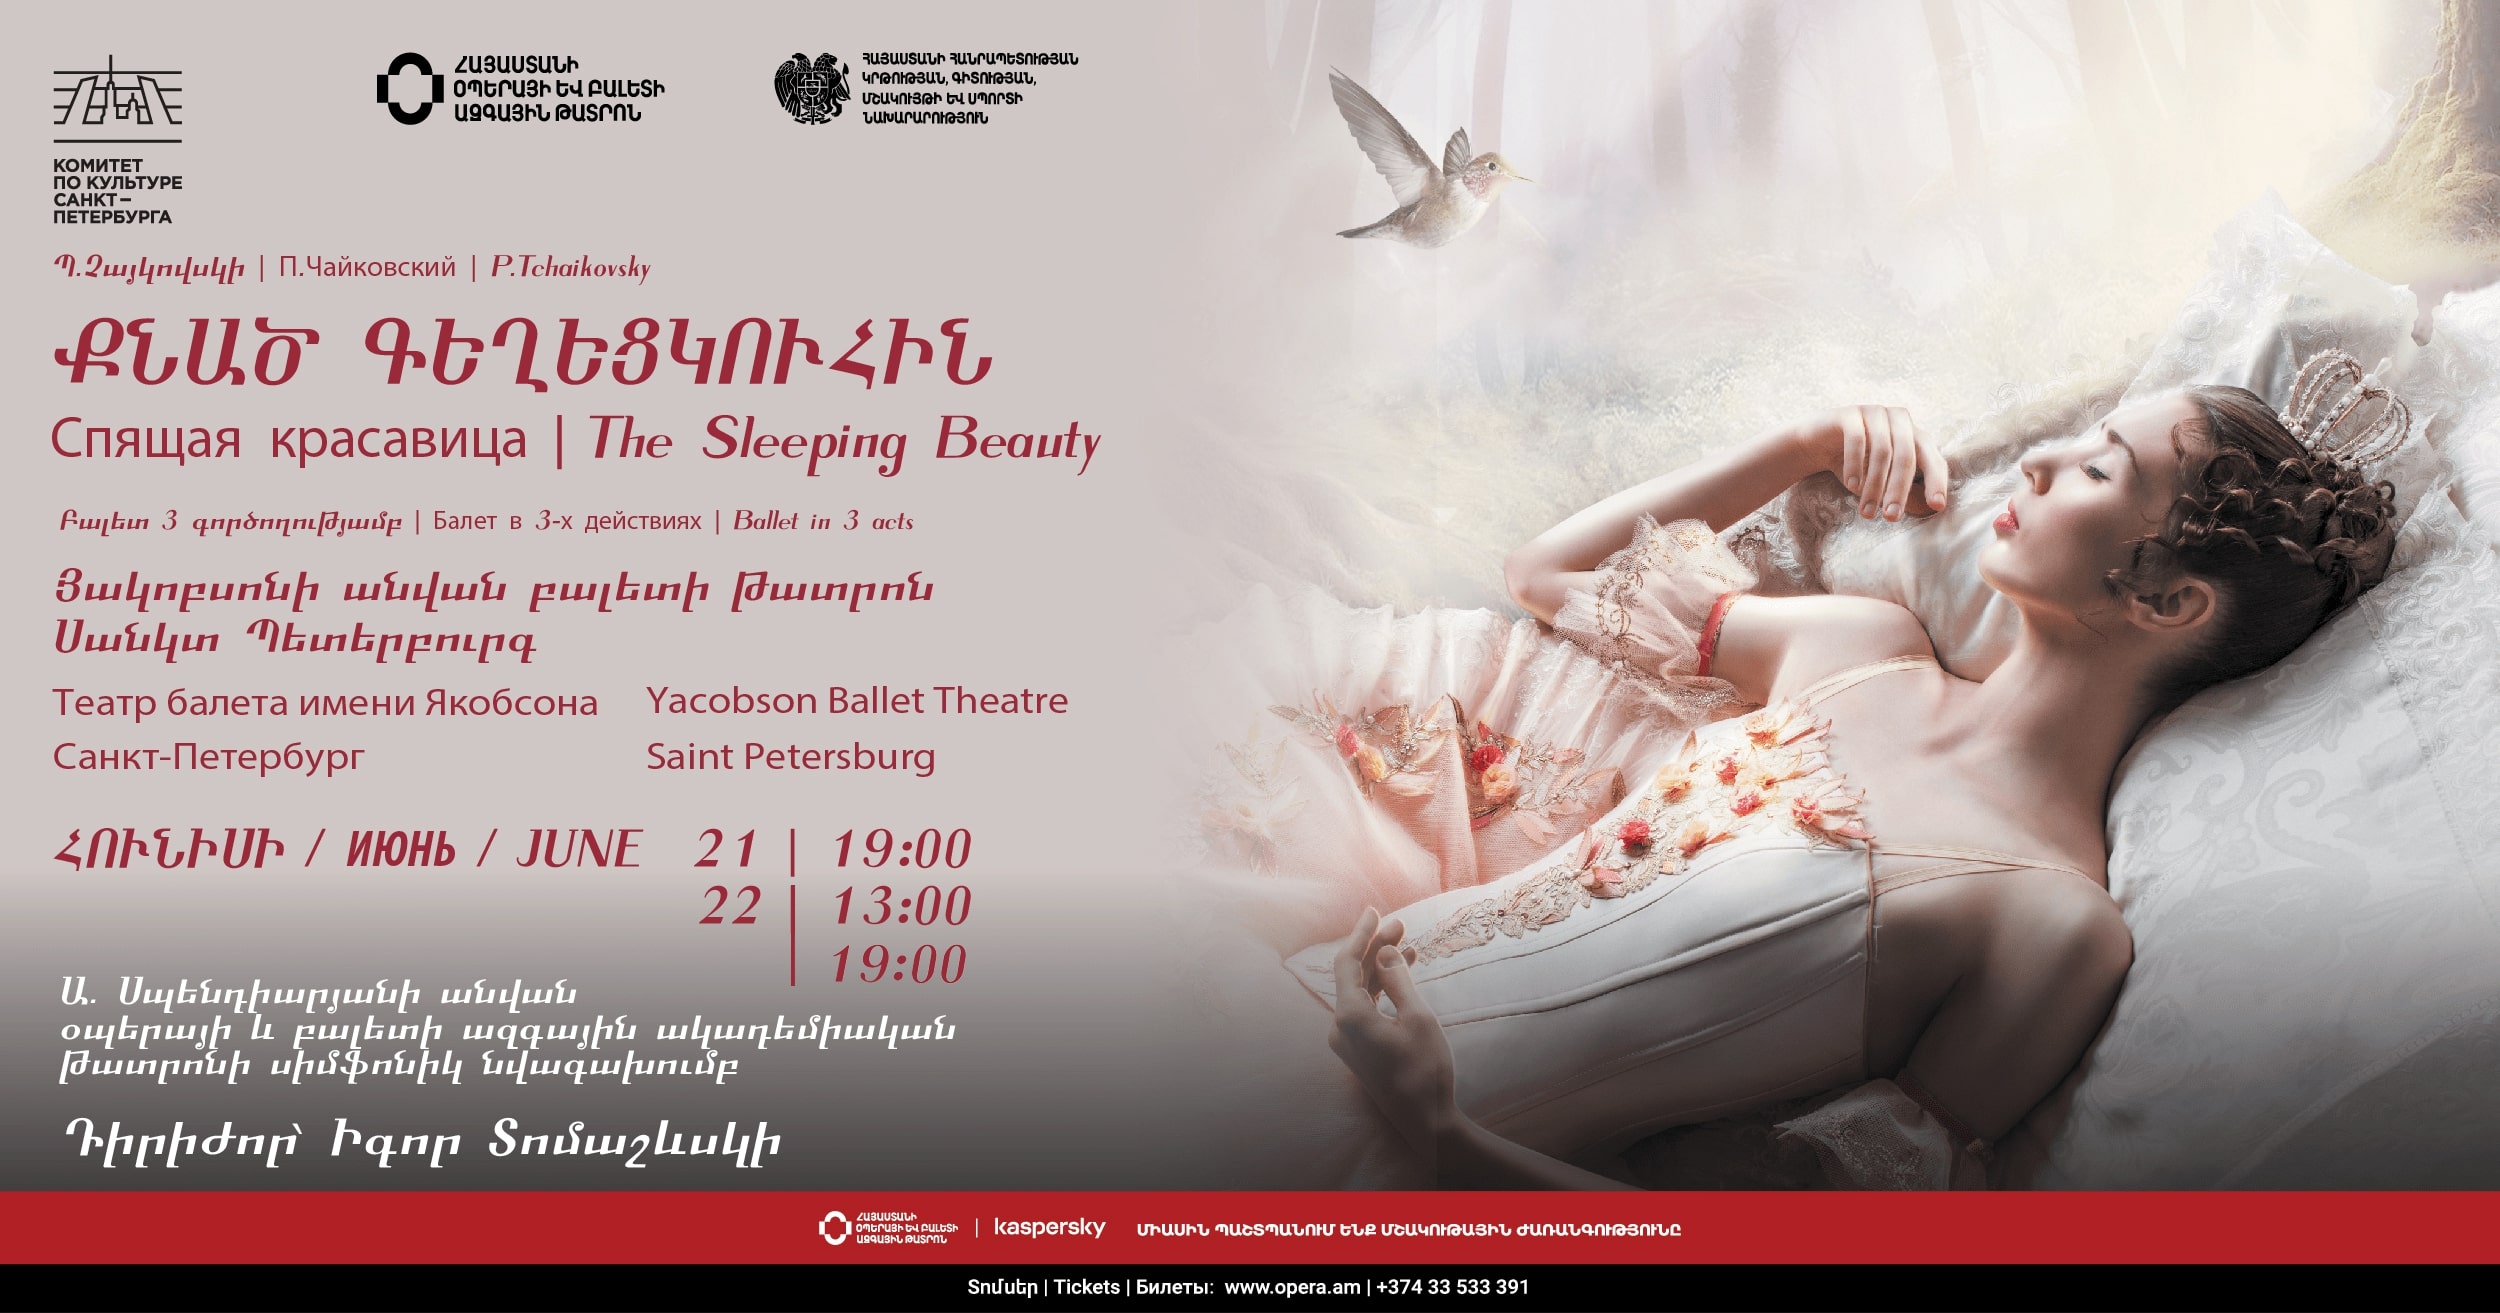 P. Tchaikovsky "The Sleeping Beauty"